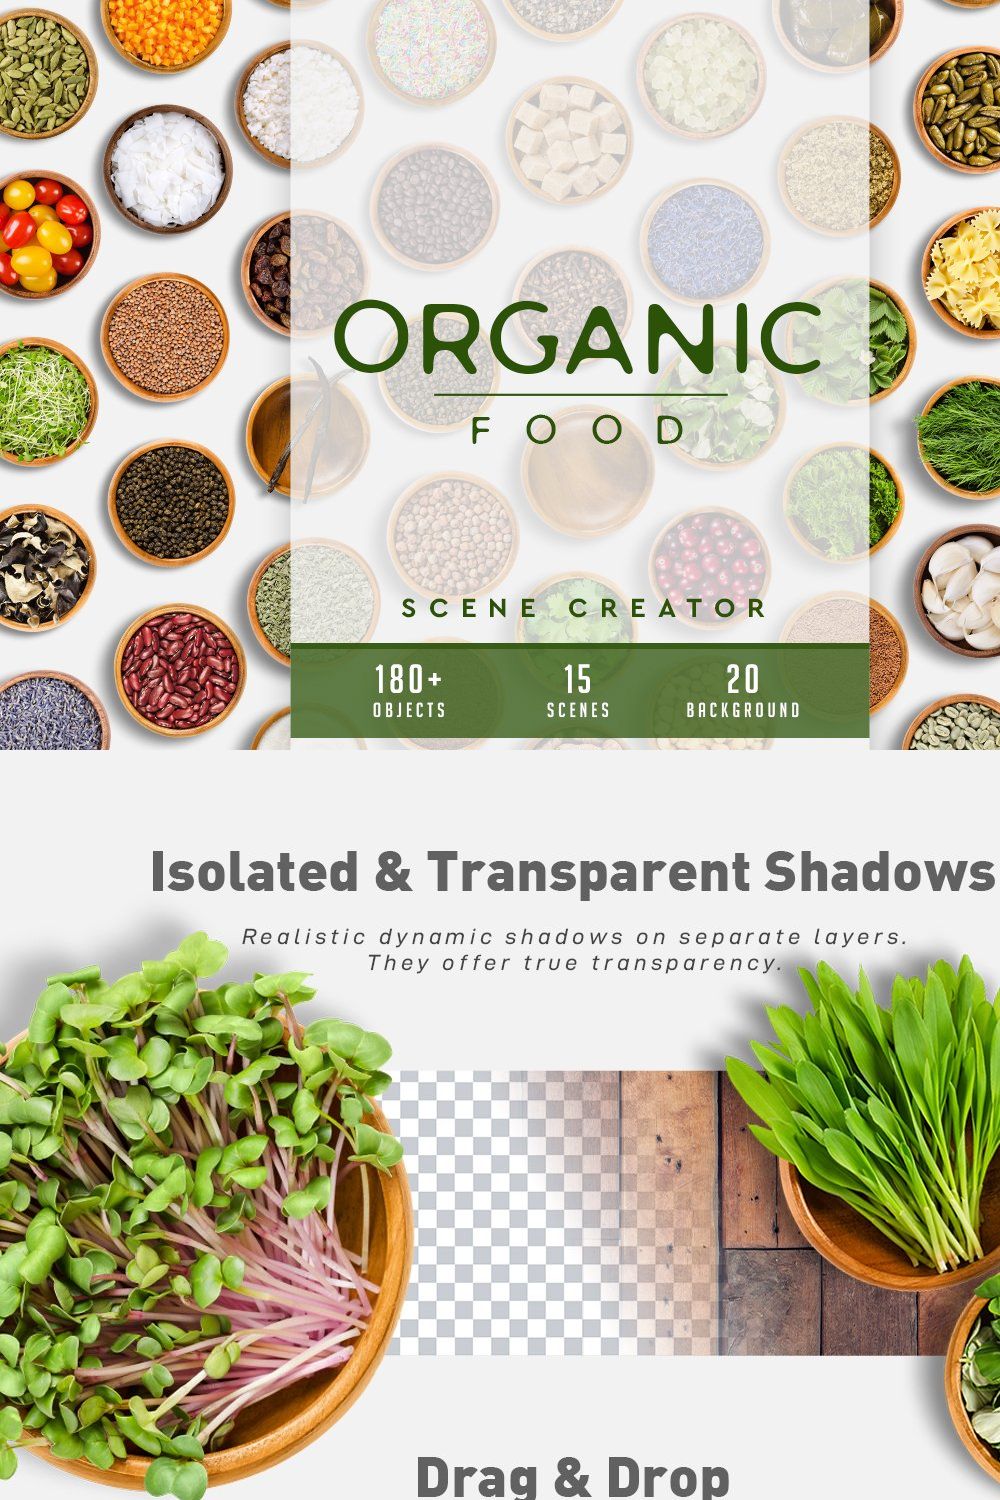 Organic Food Scene Creator_01 pinterest preview image.